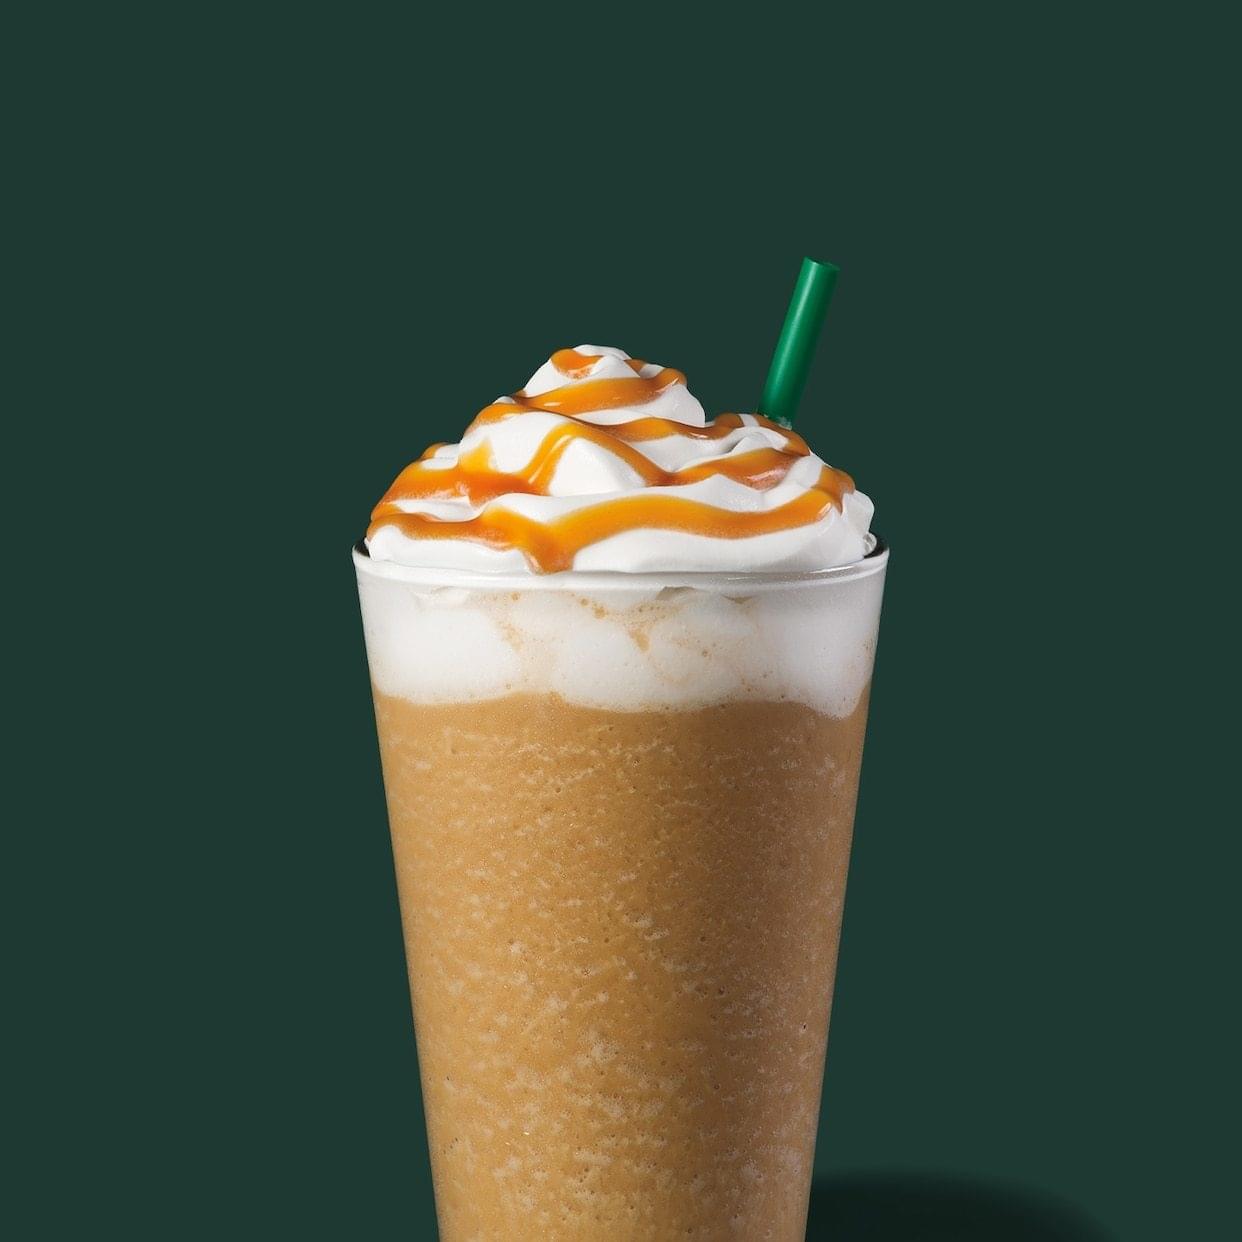 Starbucks Caramel Frappuccino Nutrition Facts